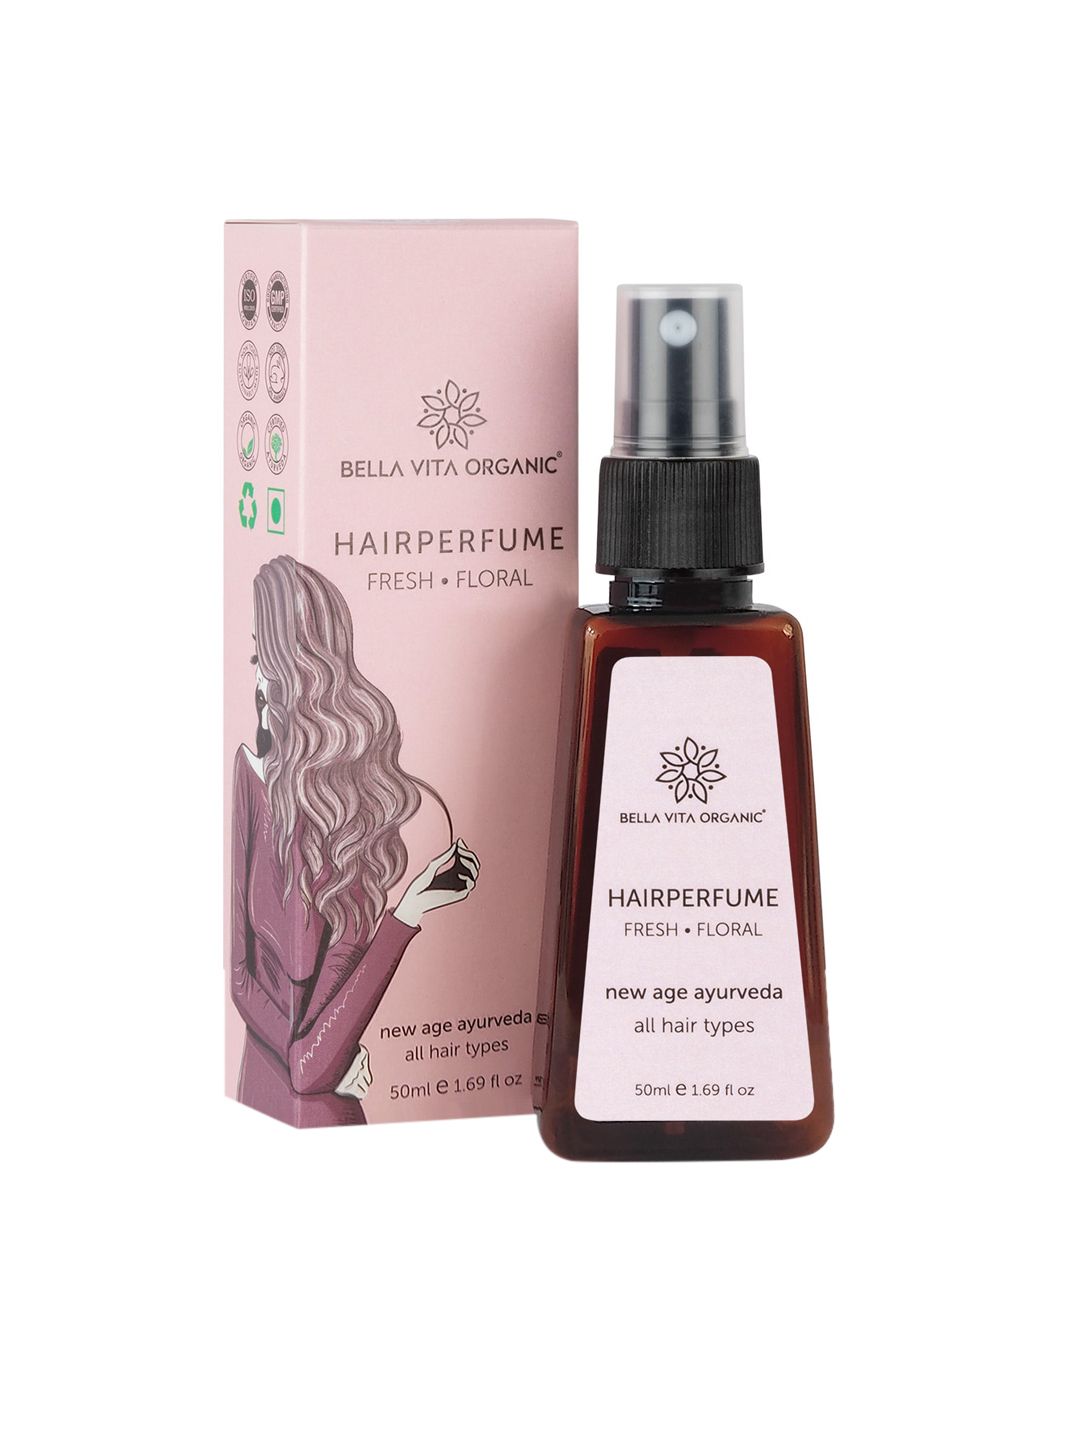 Bella Vita Organic New Age Ayurveda Hair Perfume 50ml Price in India